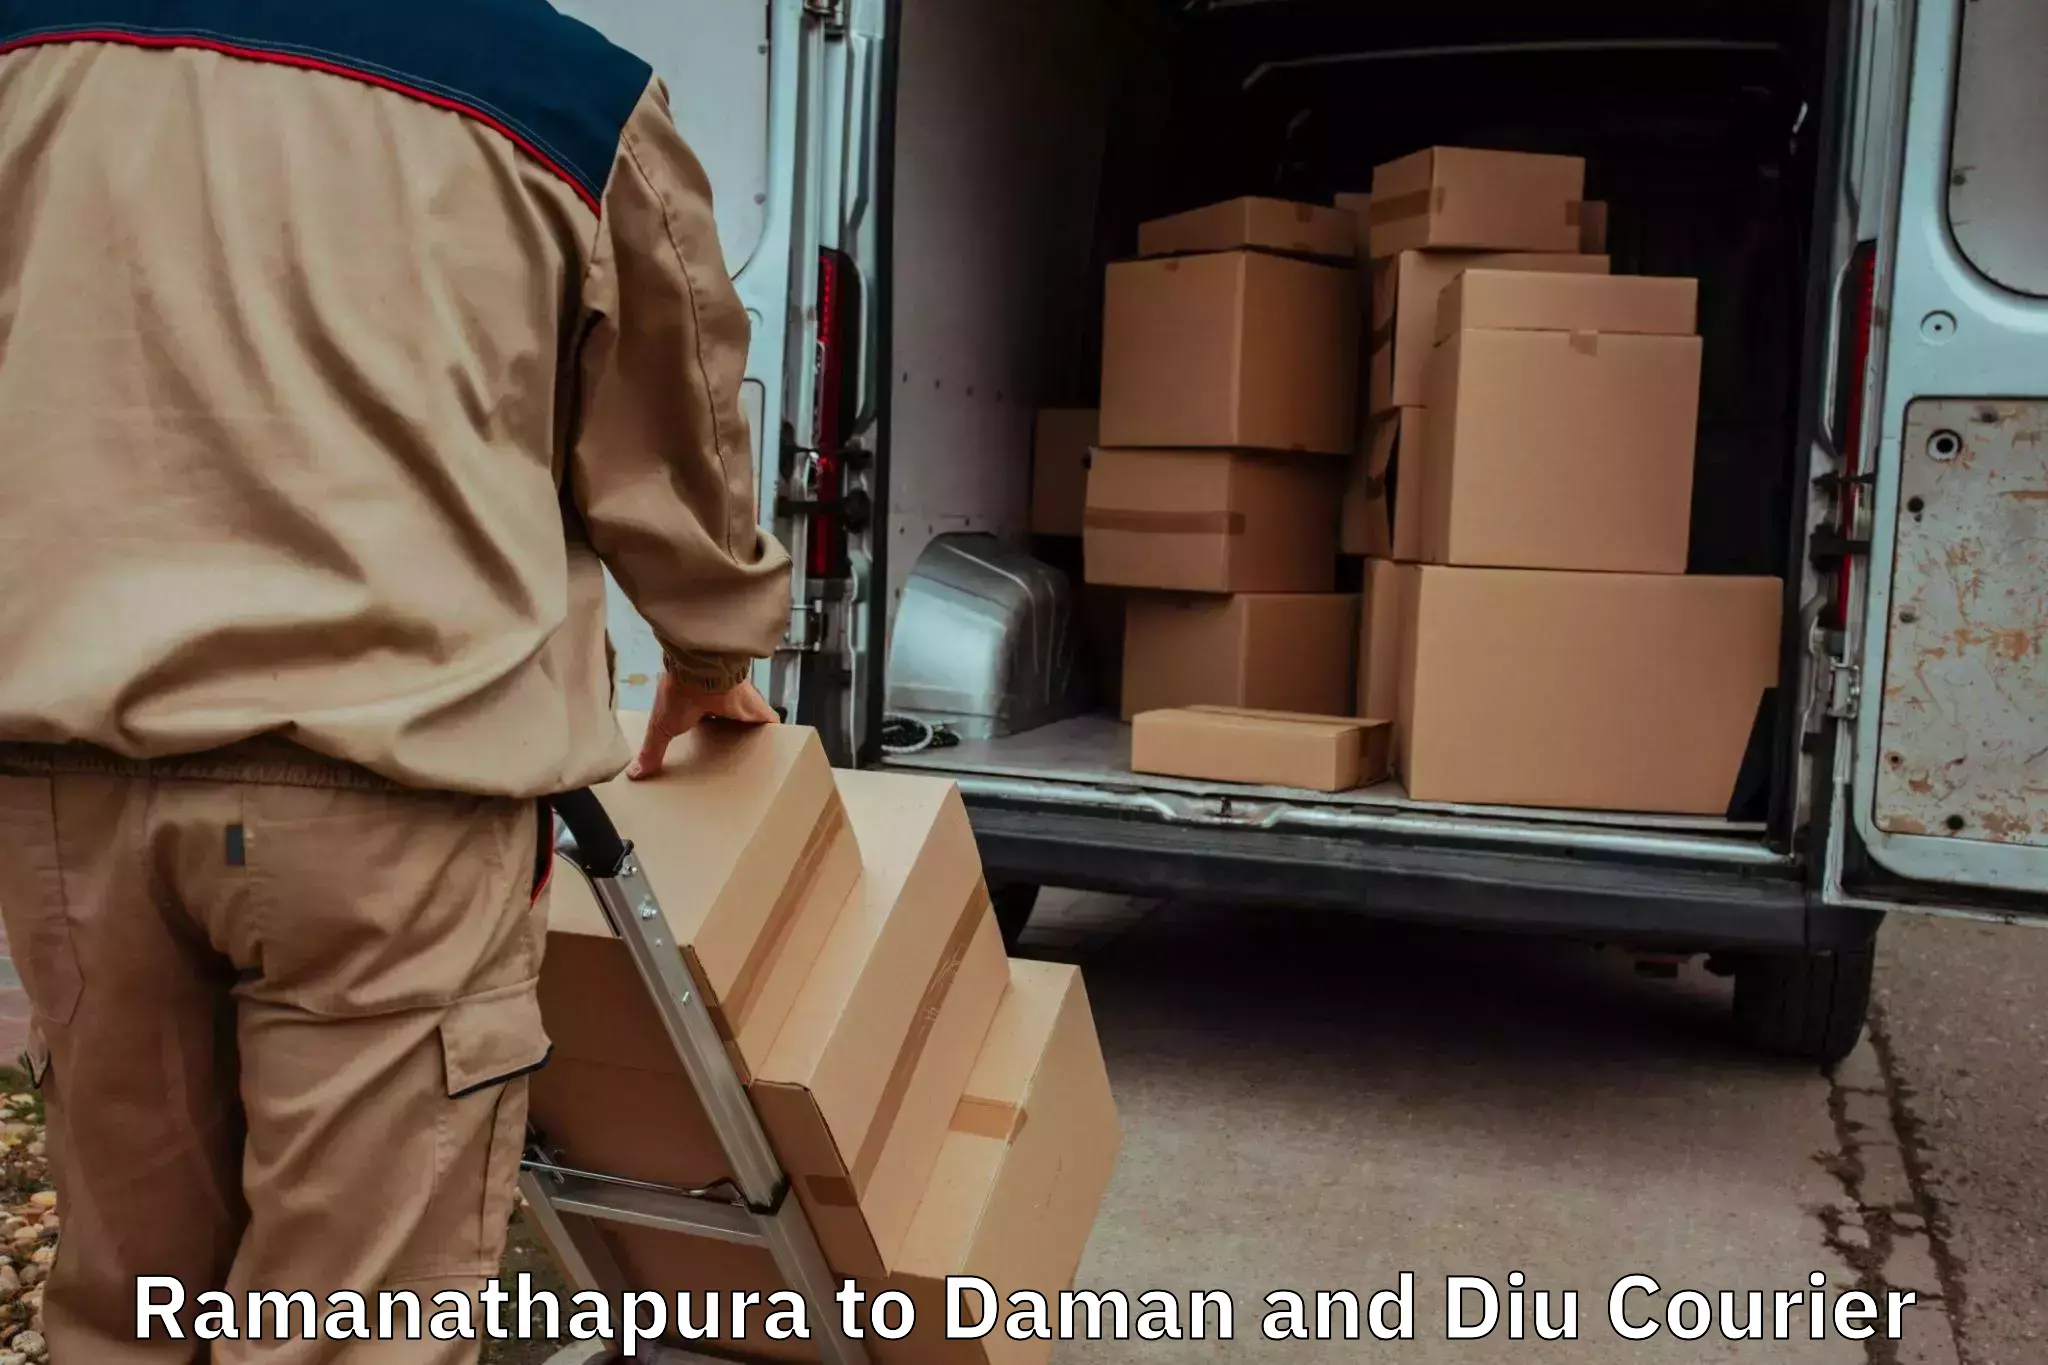 Trusted relocation experts Ramanathapura to Daman and Diu